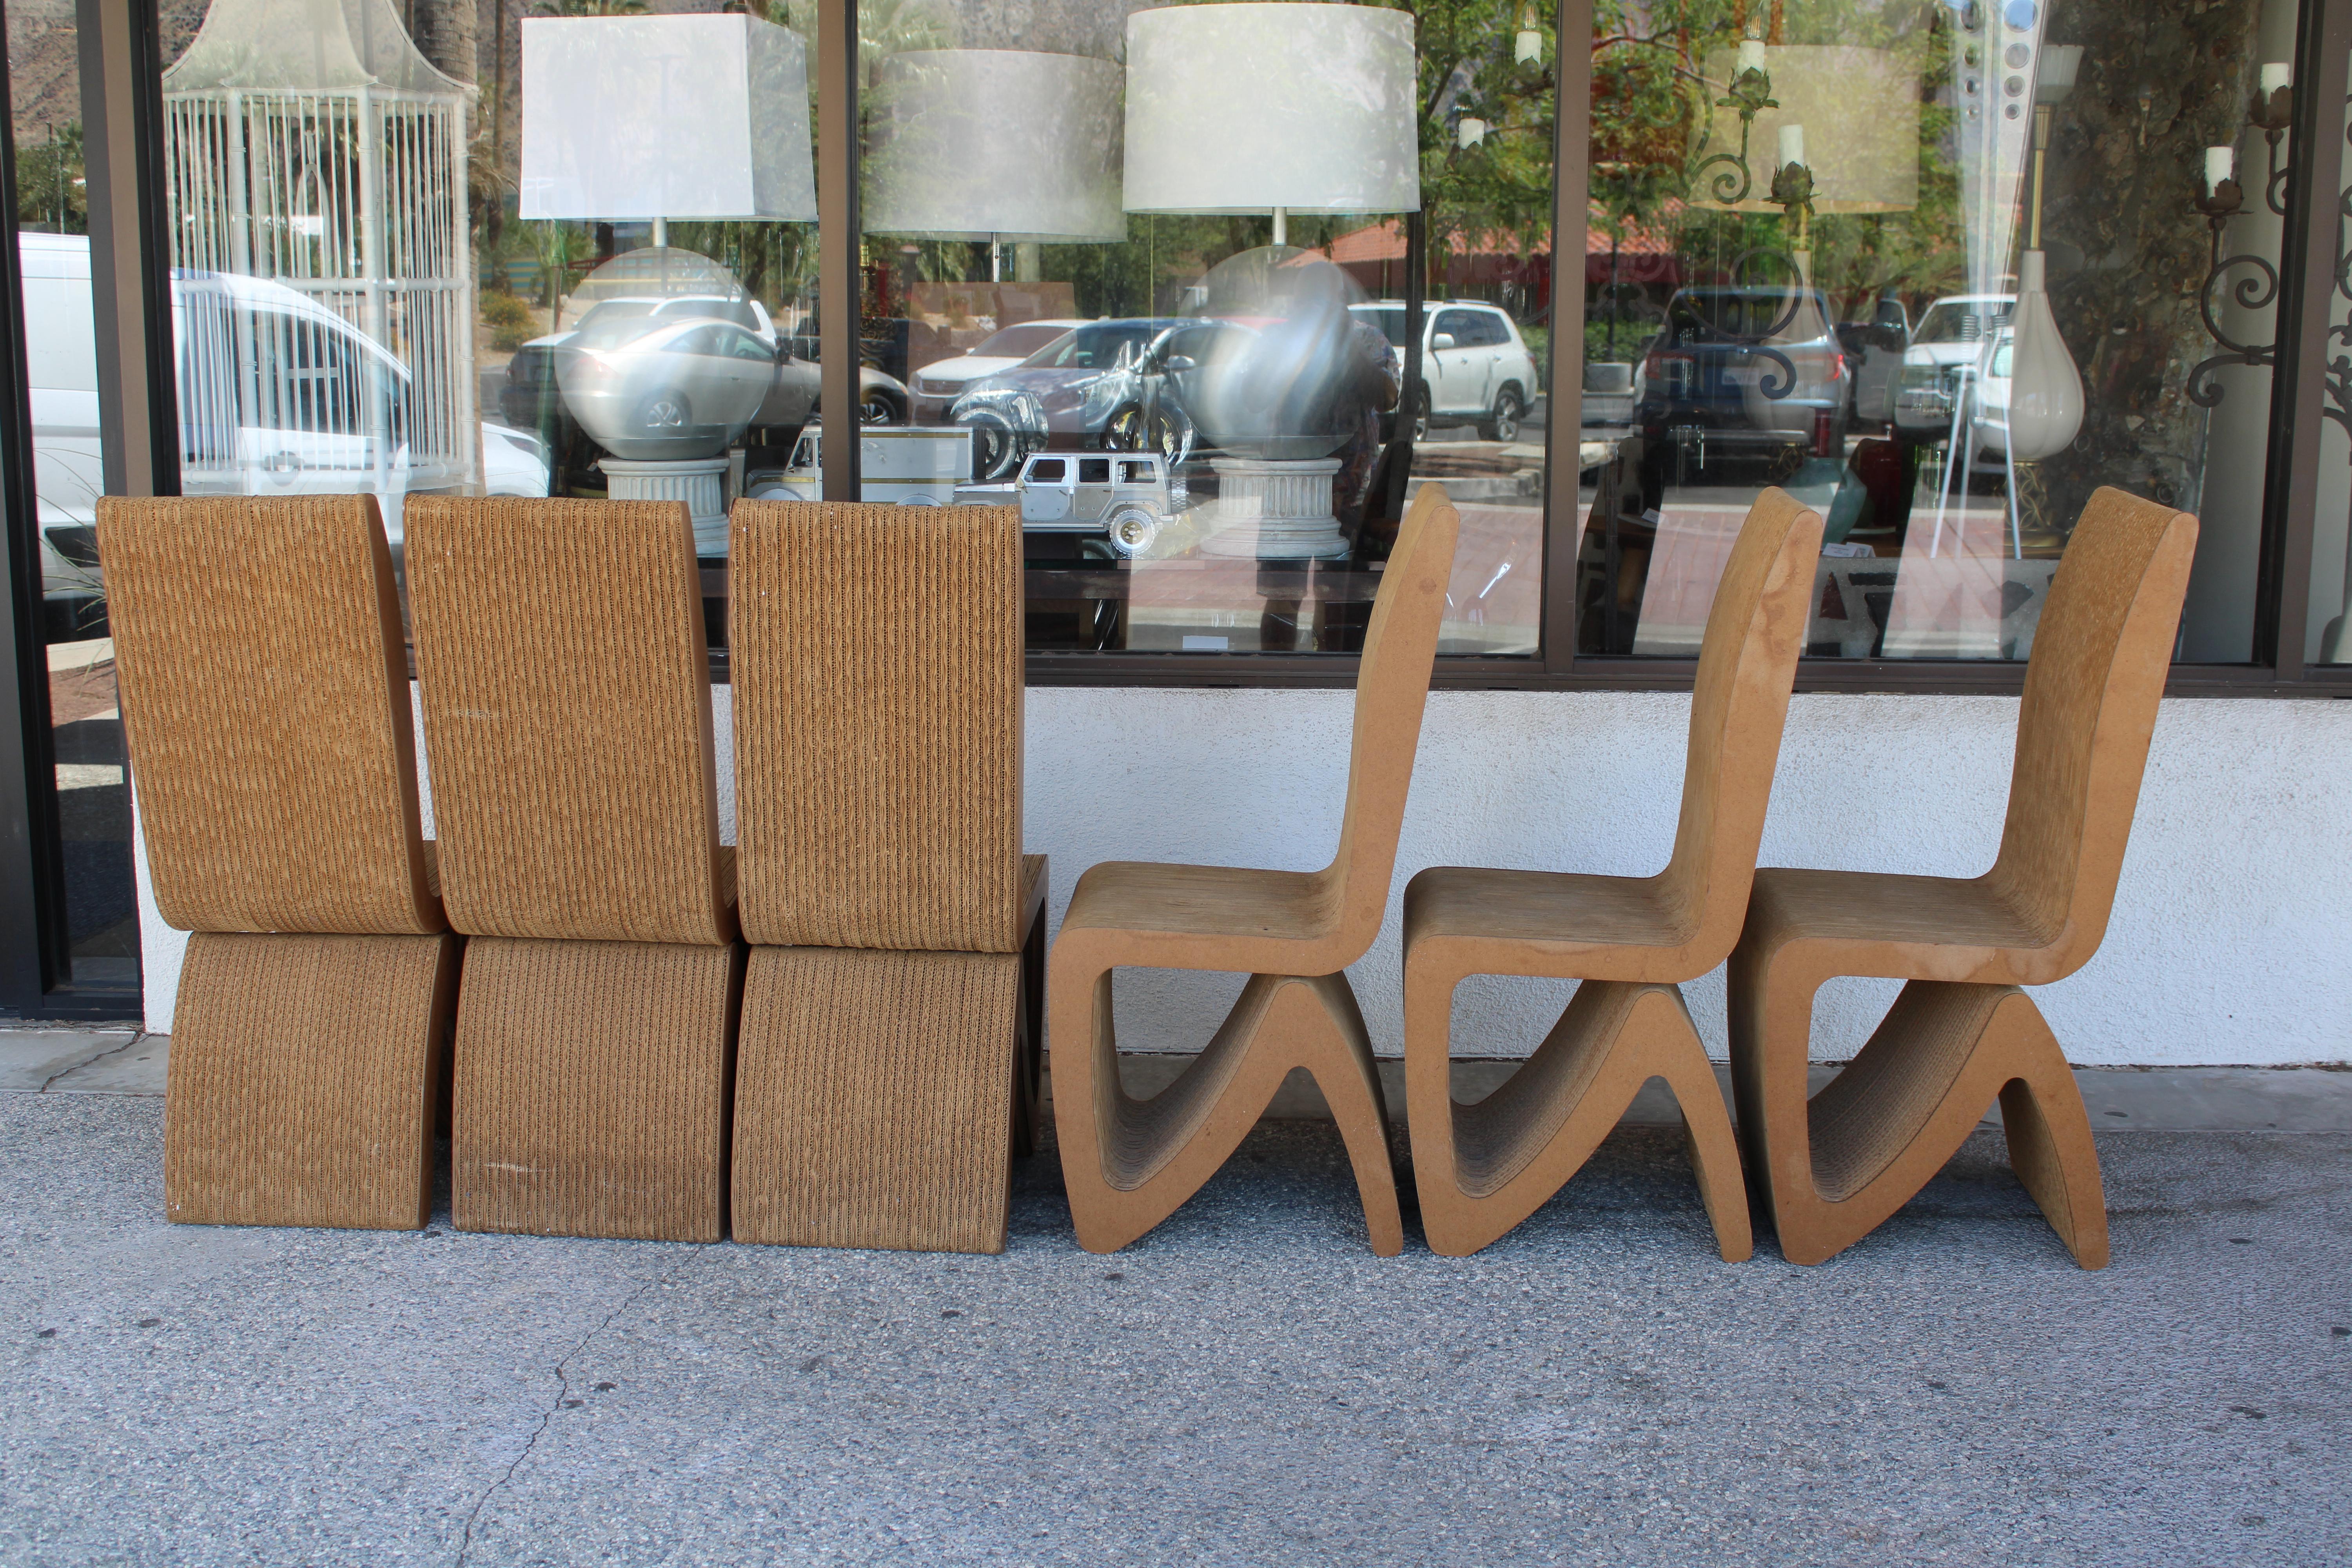 cardboard furniture for sale